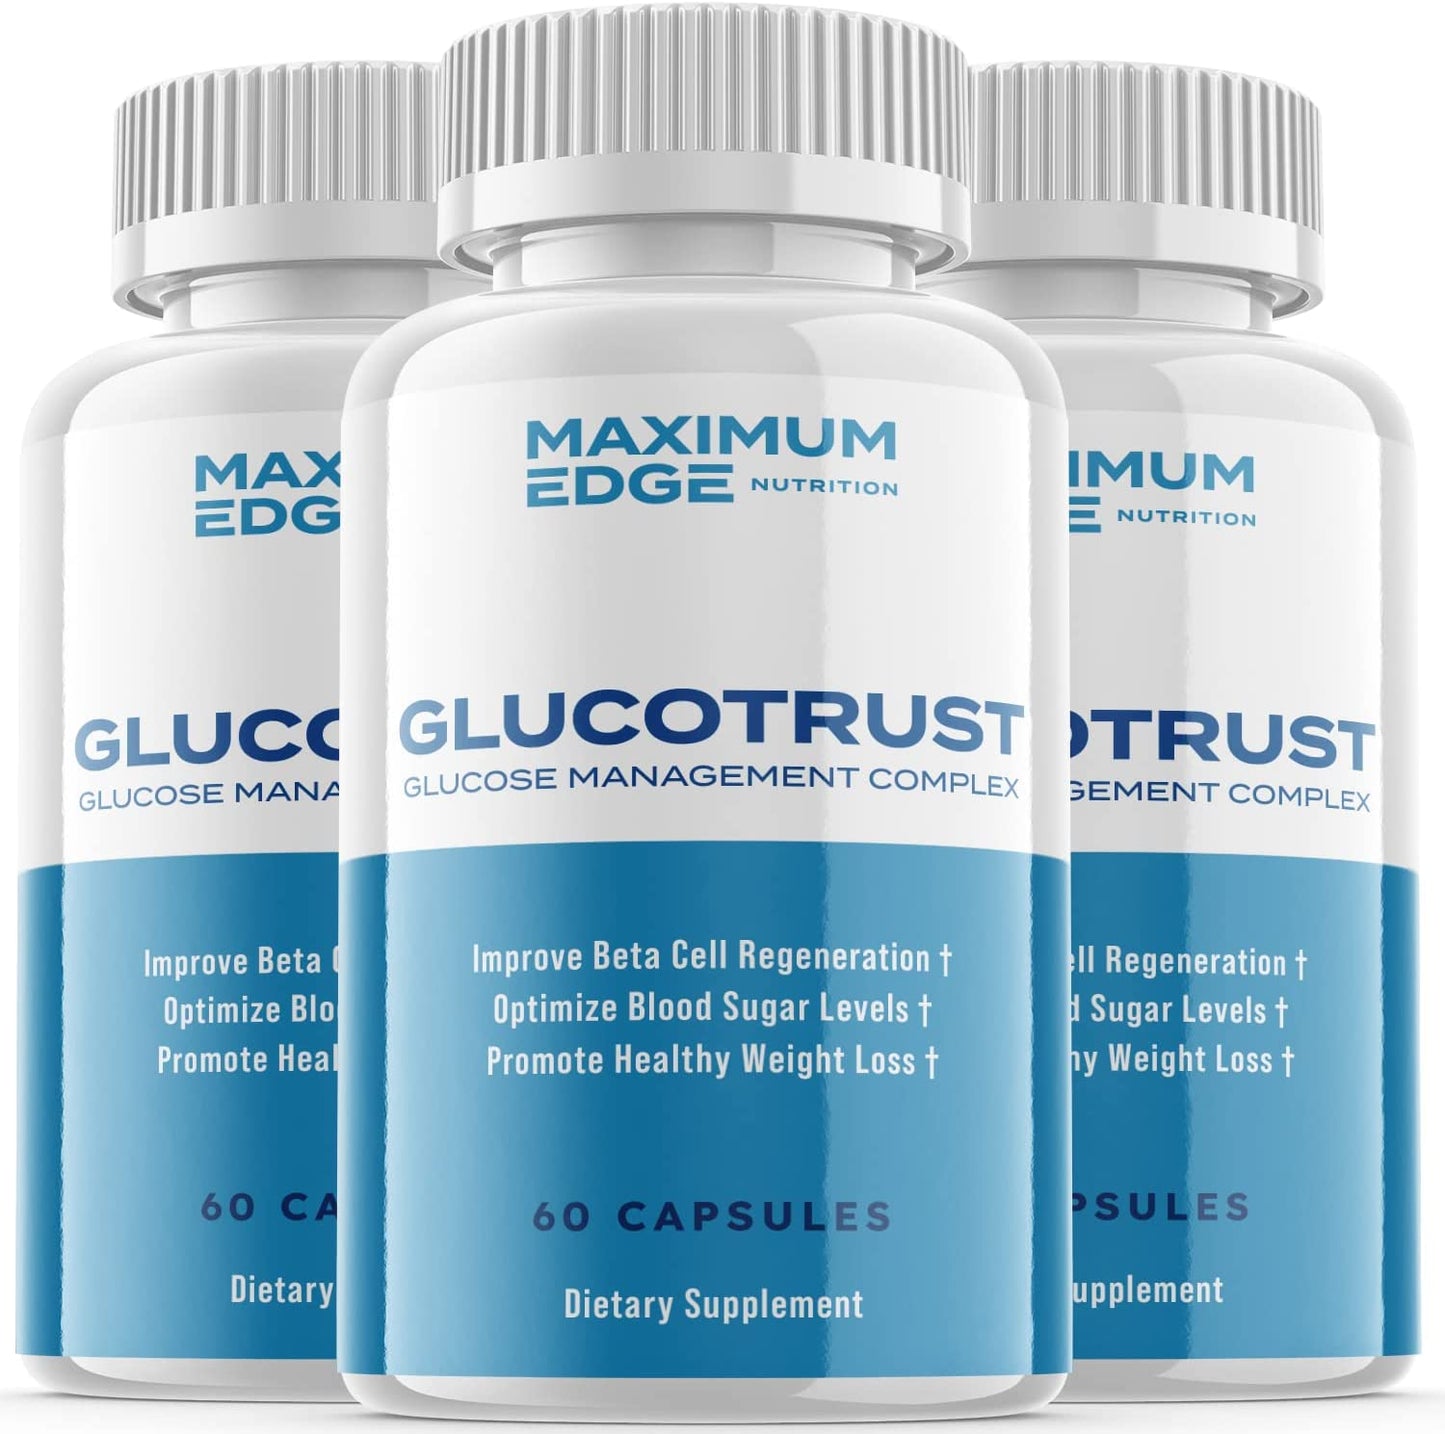 Glucotrust Pills